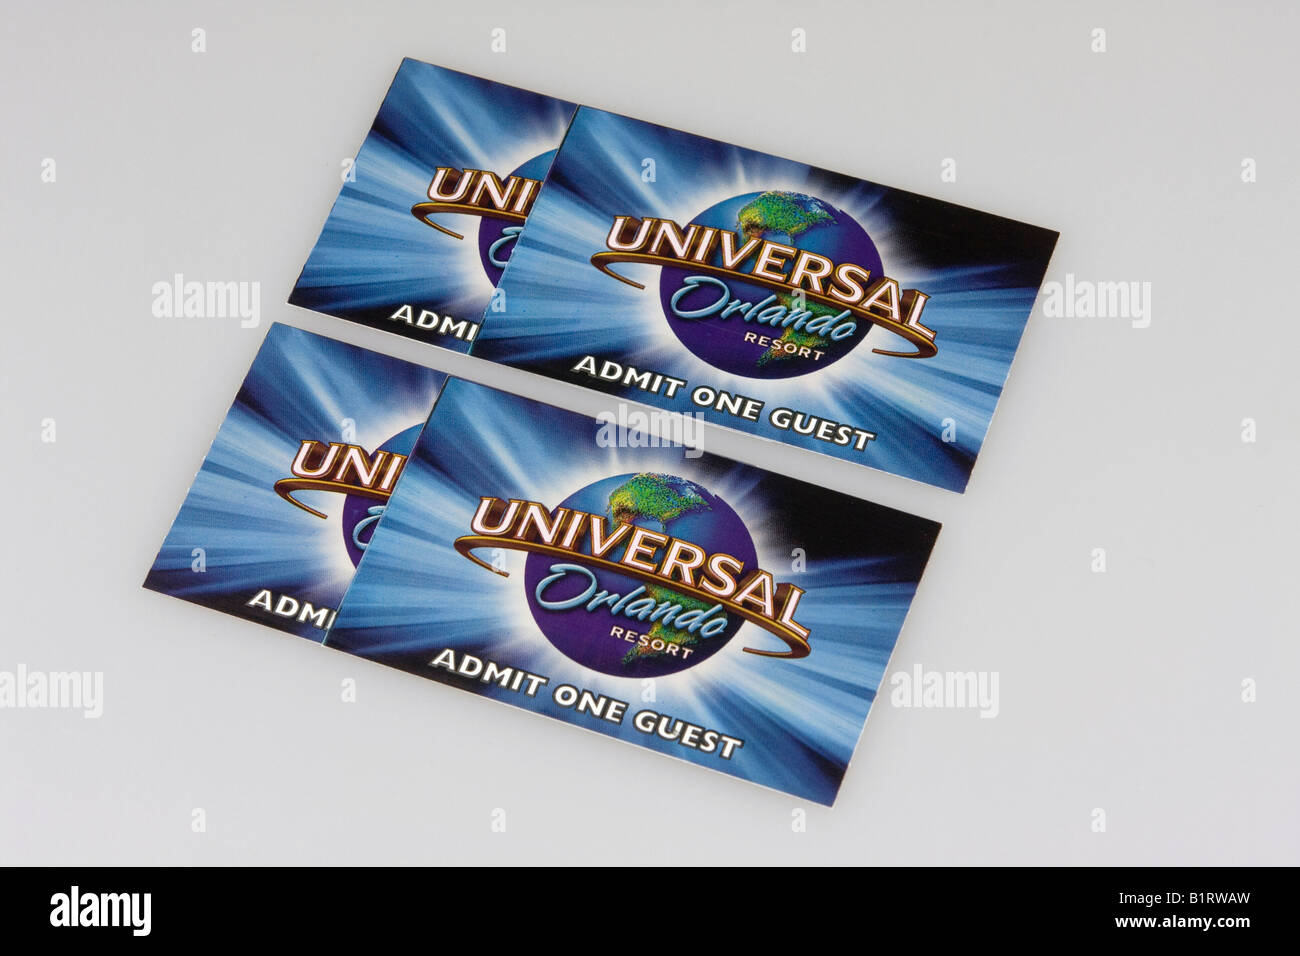 Tickets To Universal Studios In Orlando Florida Usa B1RWAW 